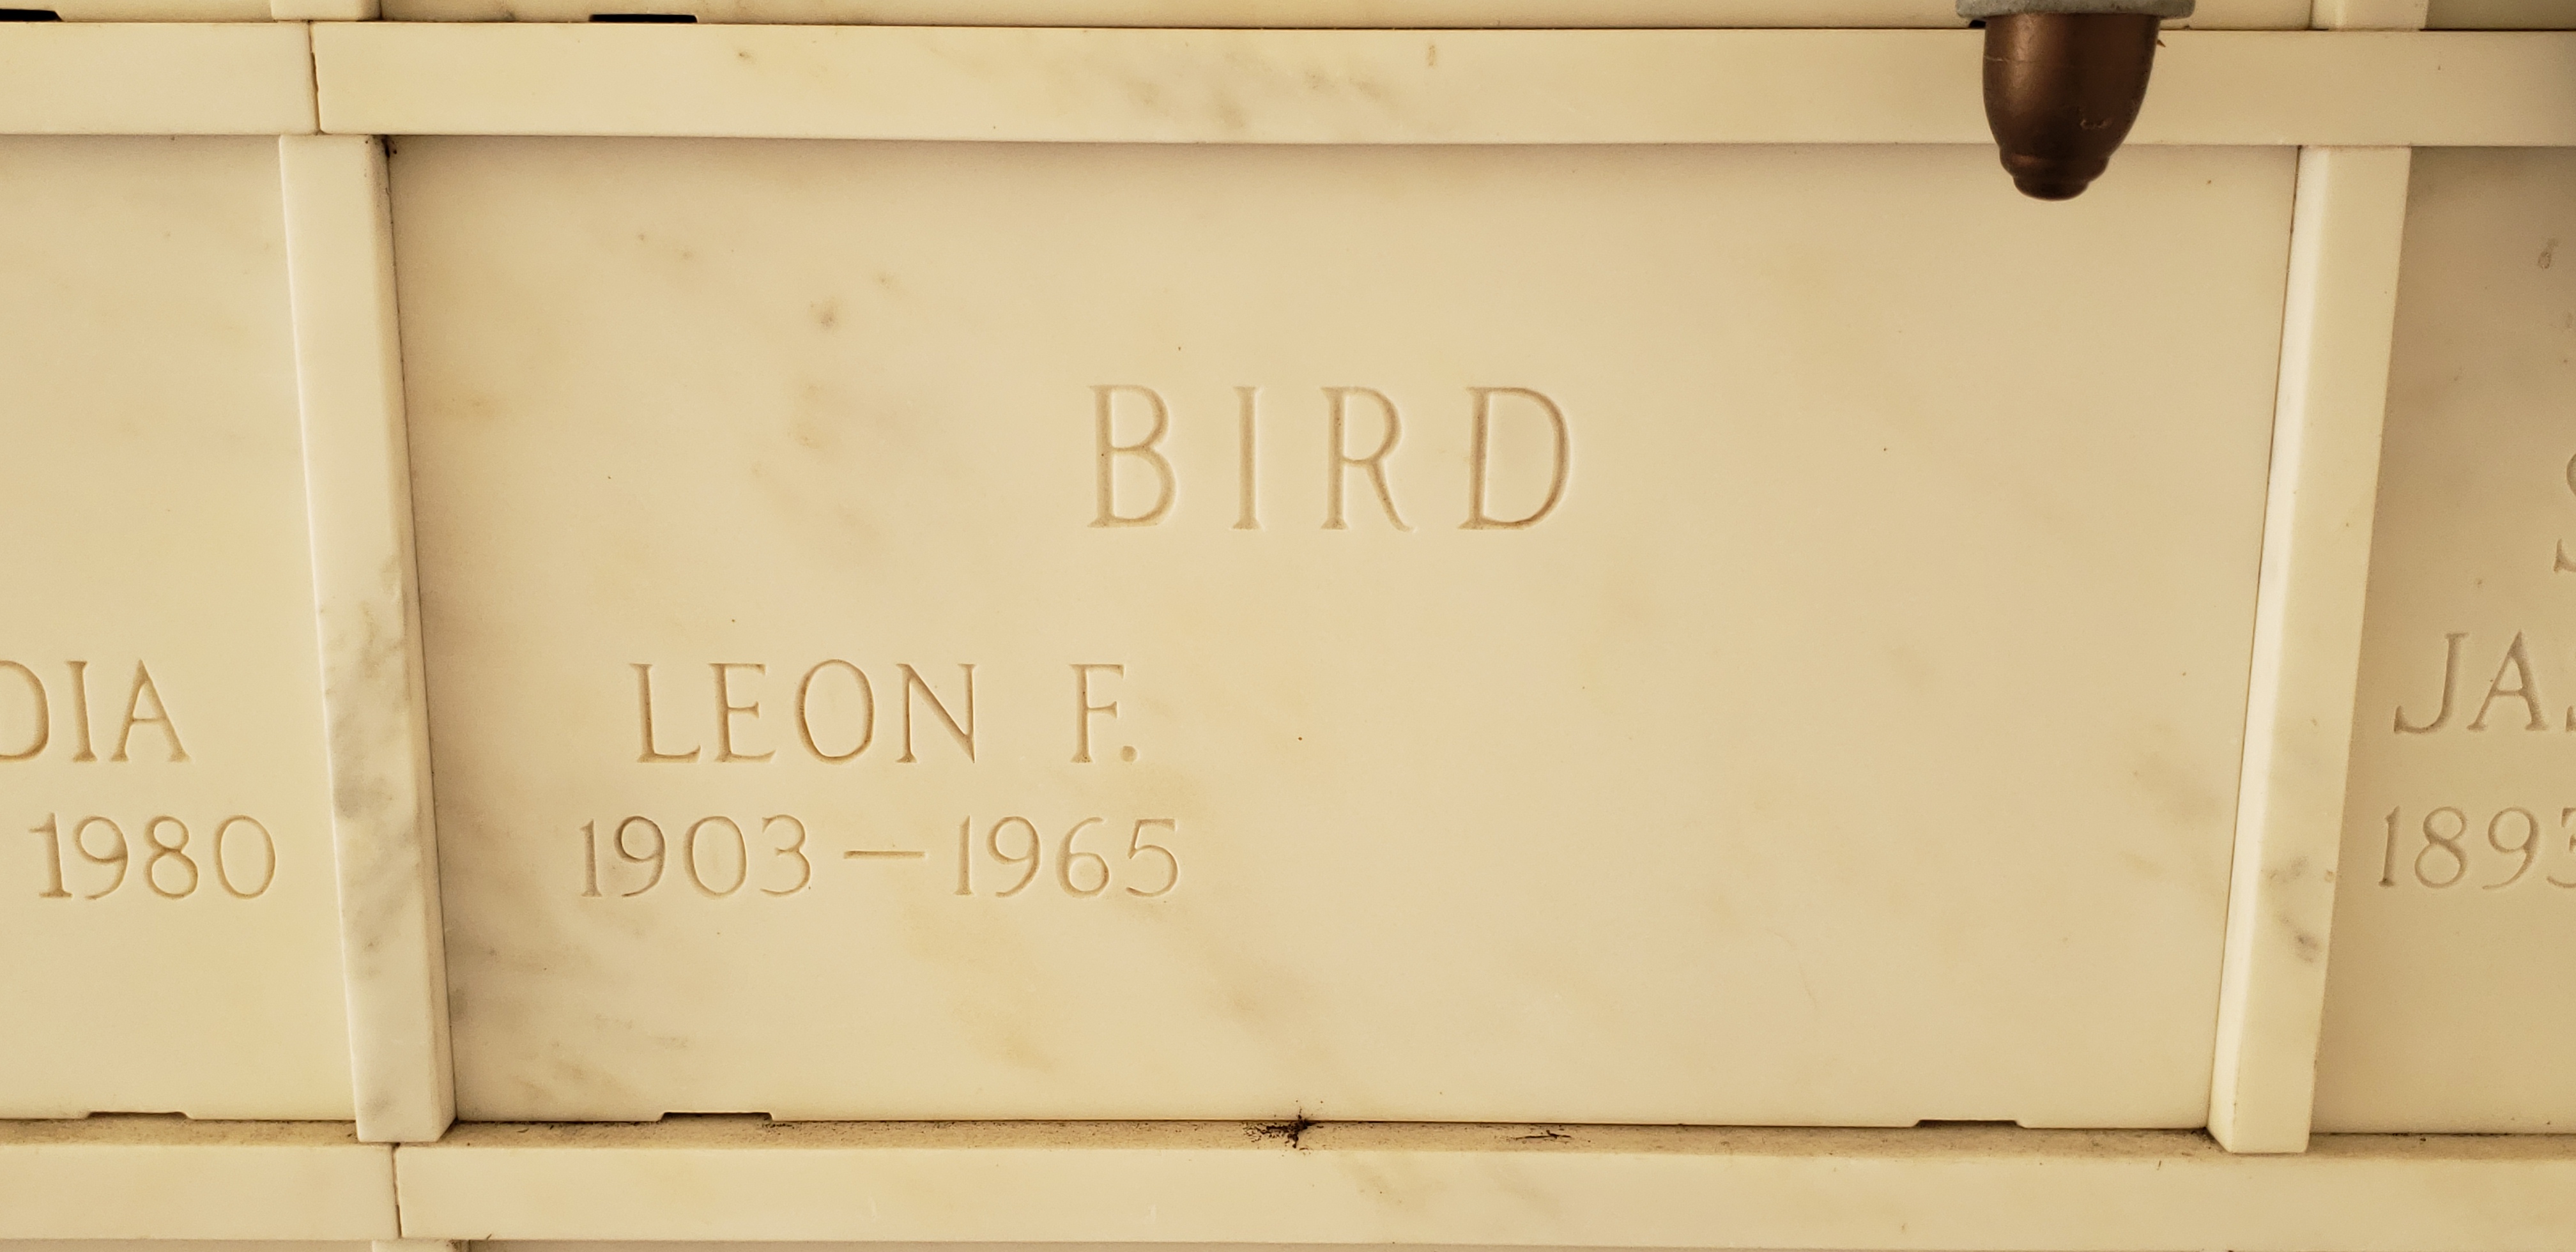 Leon F Bird